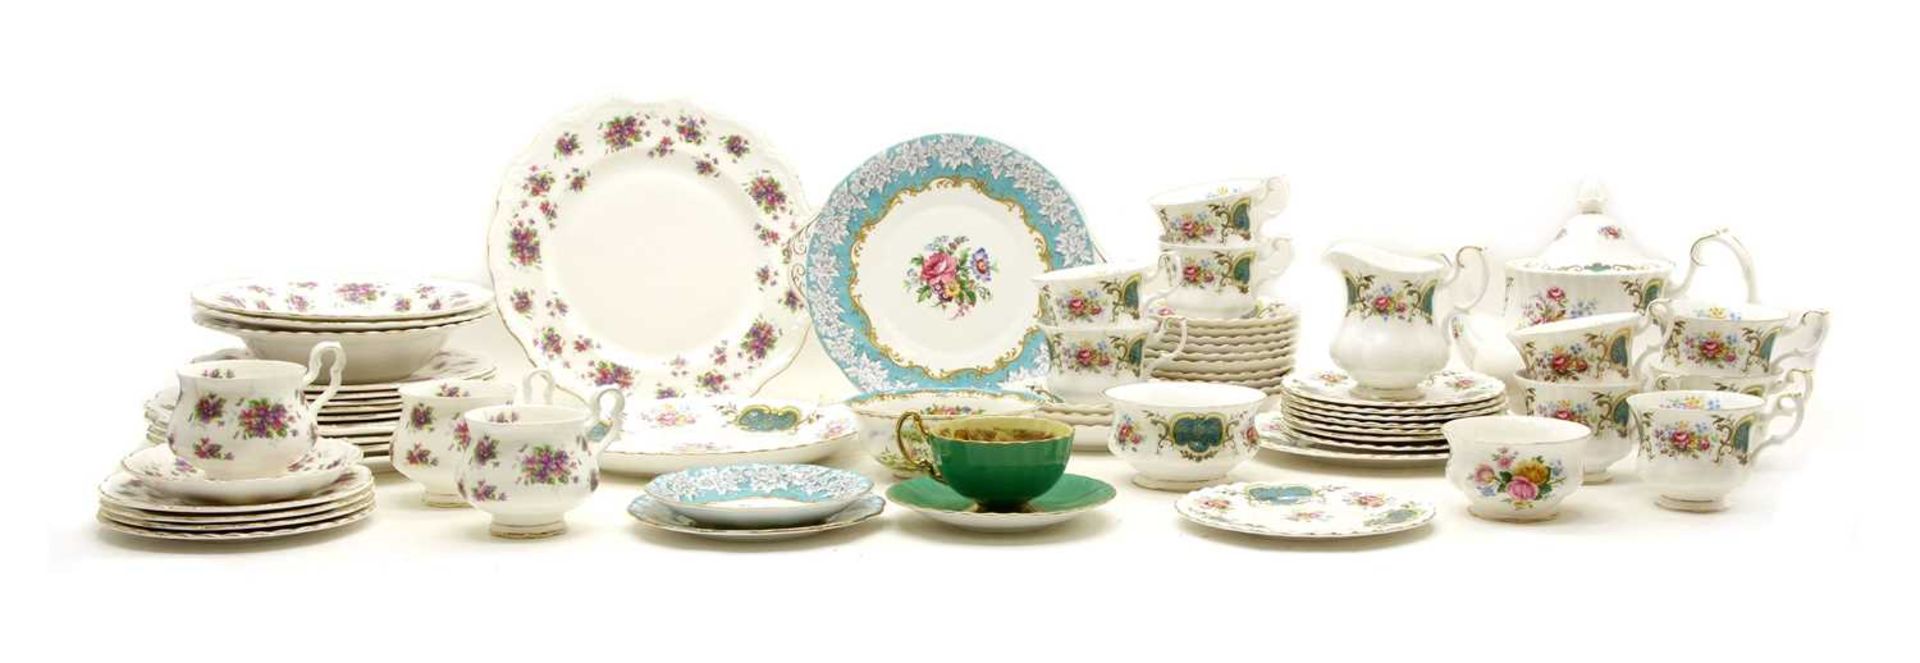 A Royal Albert Berkeley pattern tea service